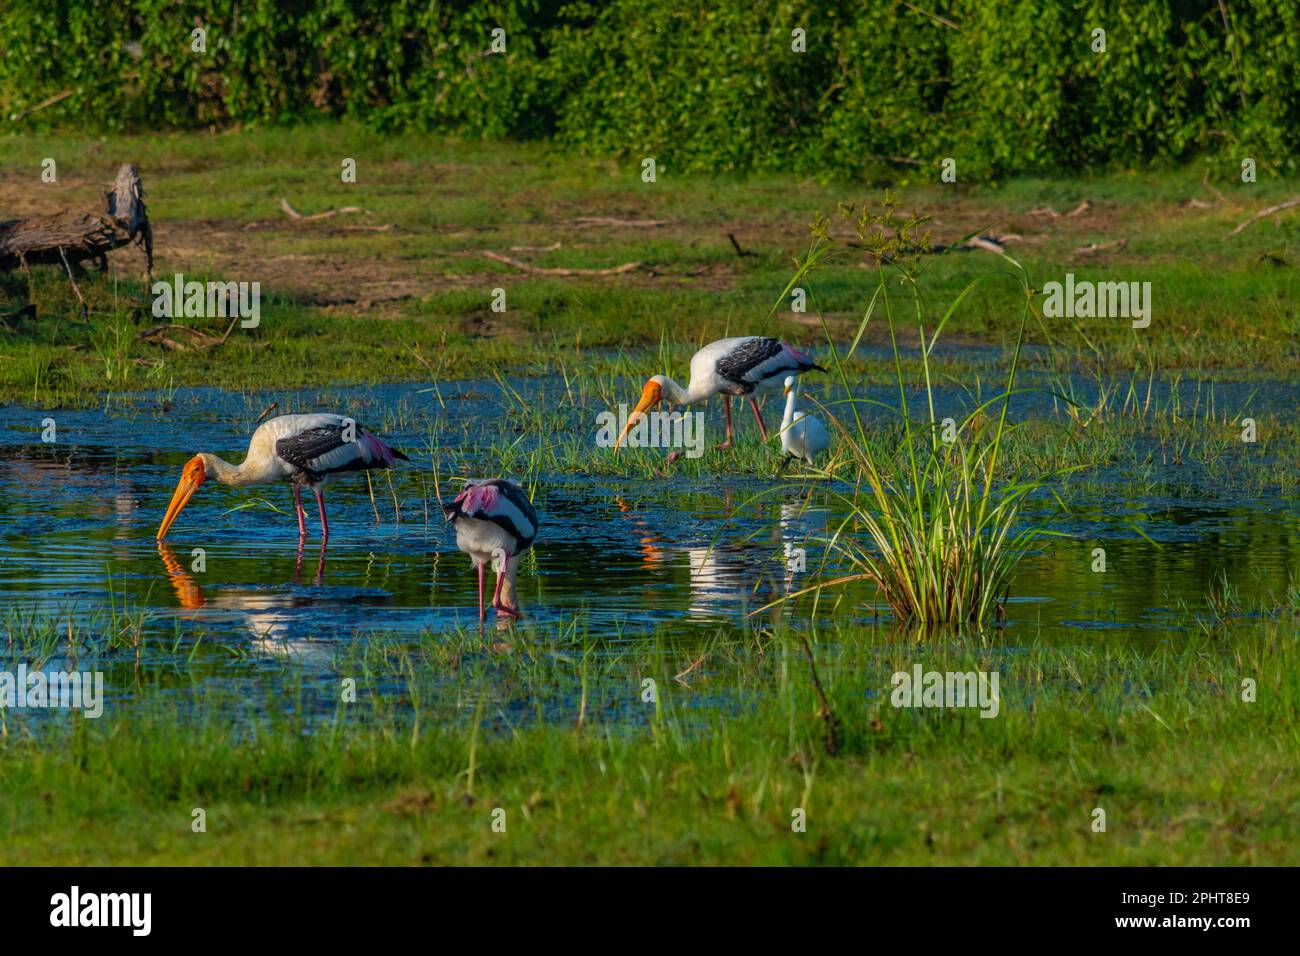 Painted storks at Bundala national park in Sri Lanka. Stock Photo